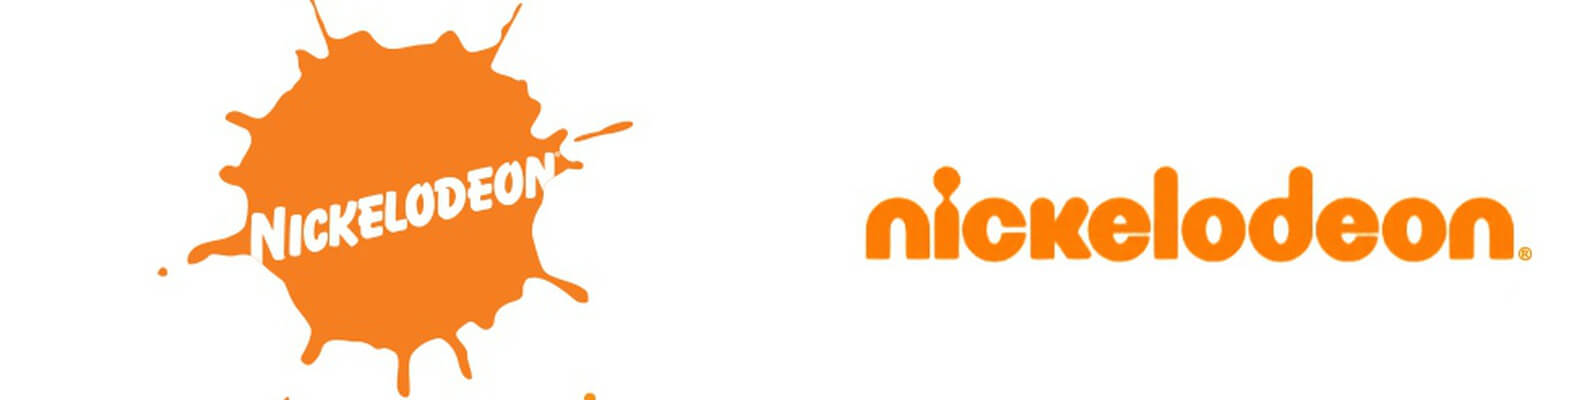 старое и новое лого Nickelodeon